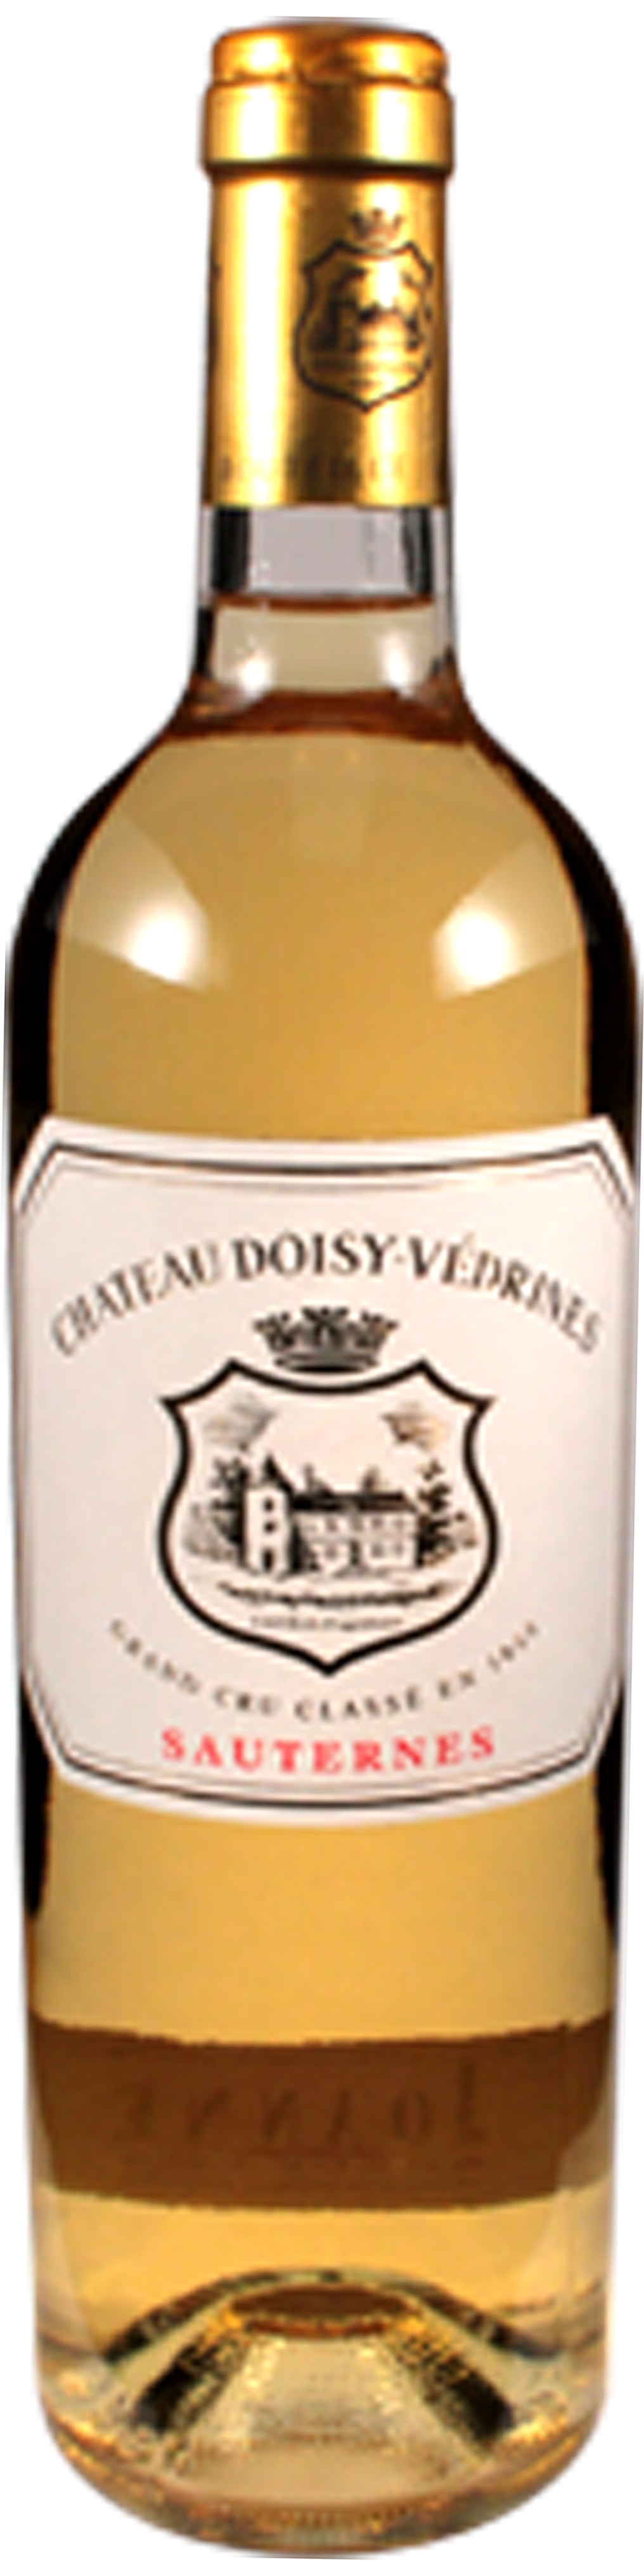 Bottle shot of 2007 Château Doisy Védrines, 2ème Cru Barsac